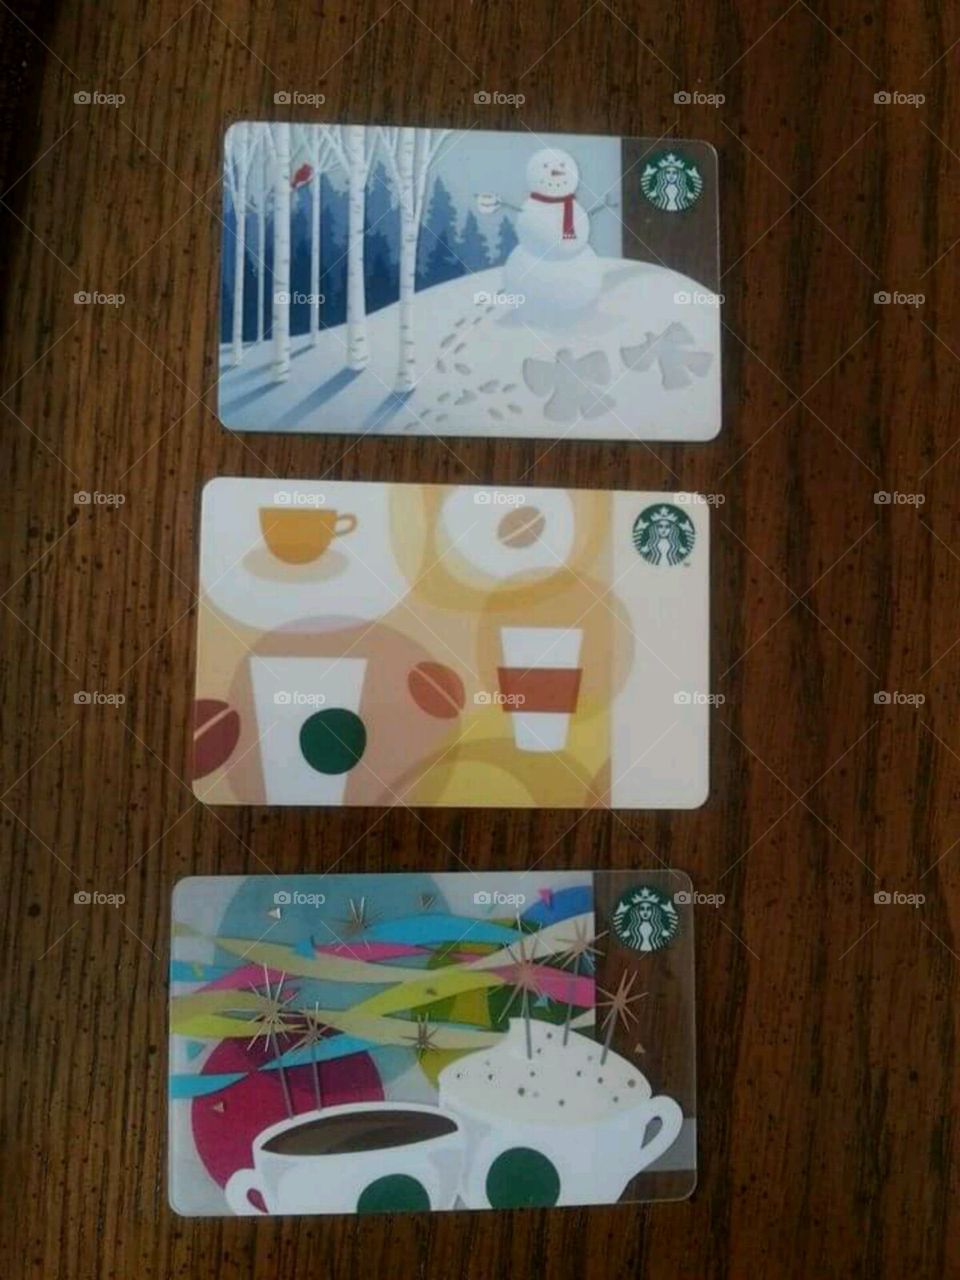 Starbucks cards